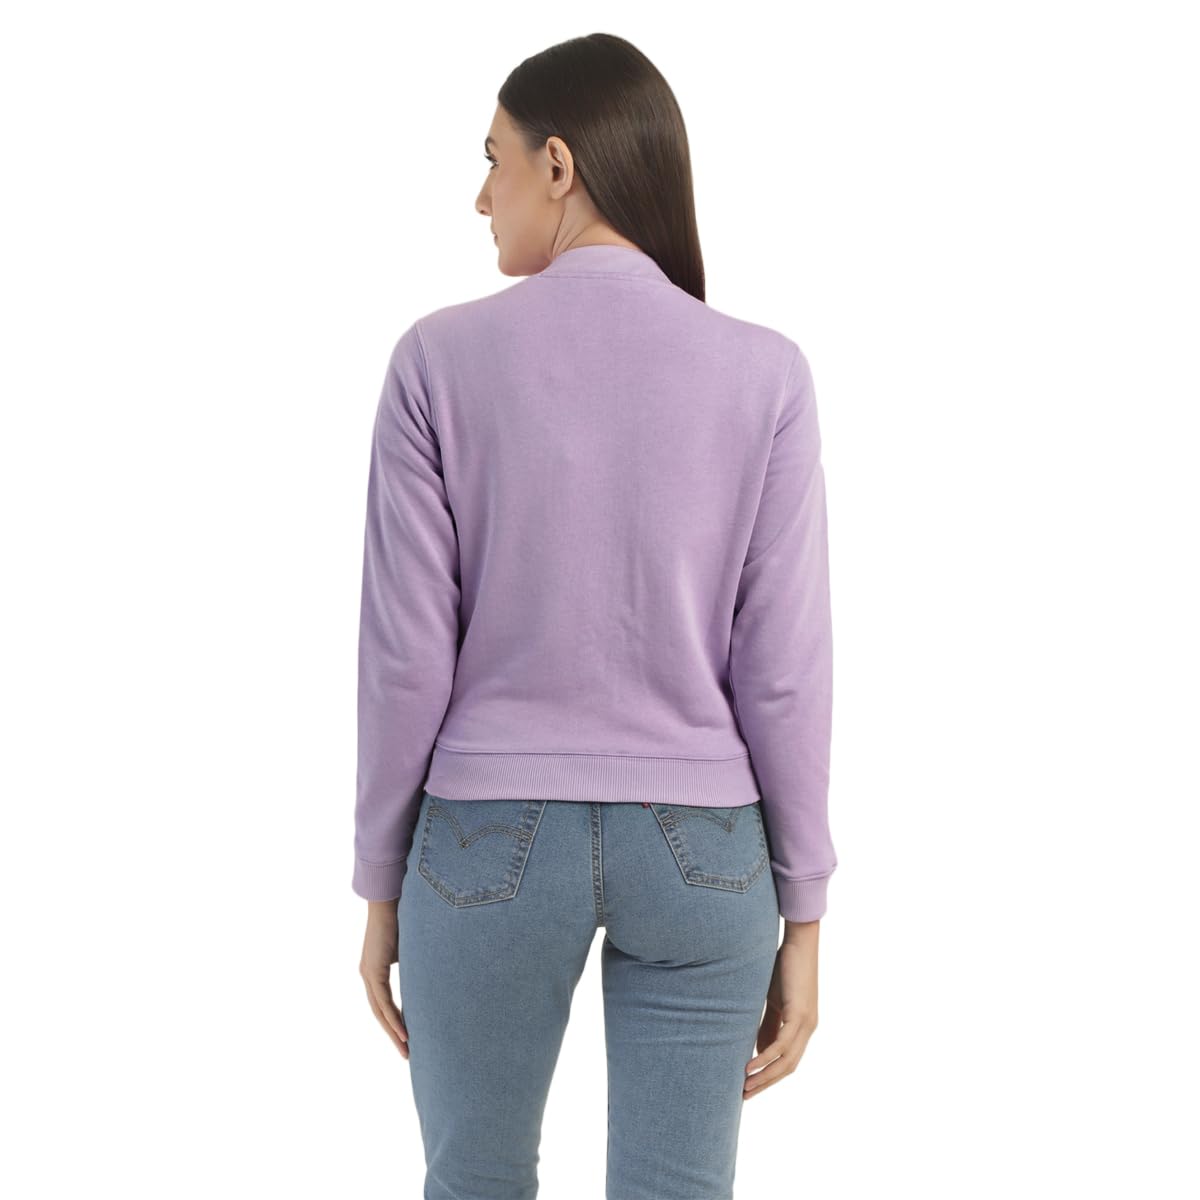 Levi's Women's Printed Purple Crew Neck Sweatshirt